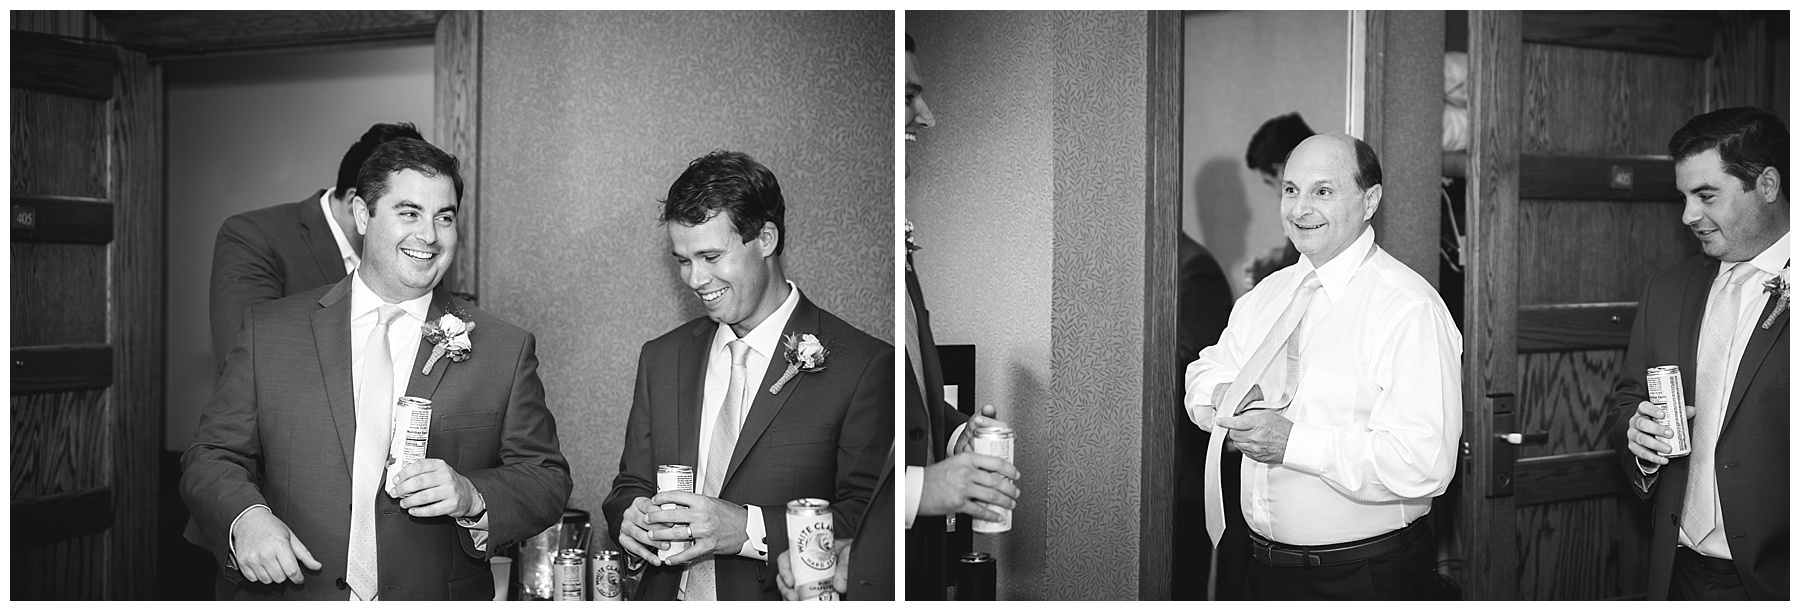 men in suits having drinks before wedding